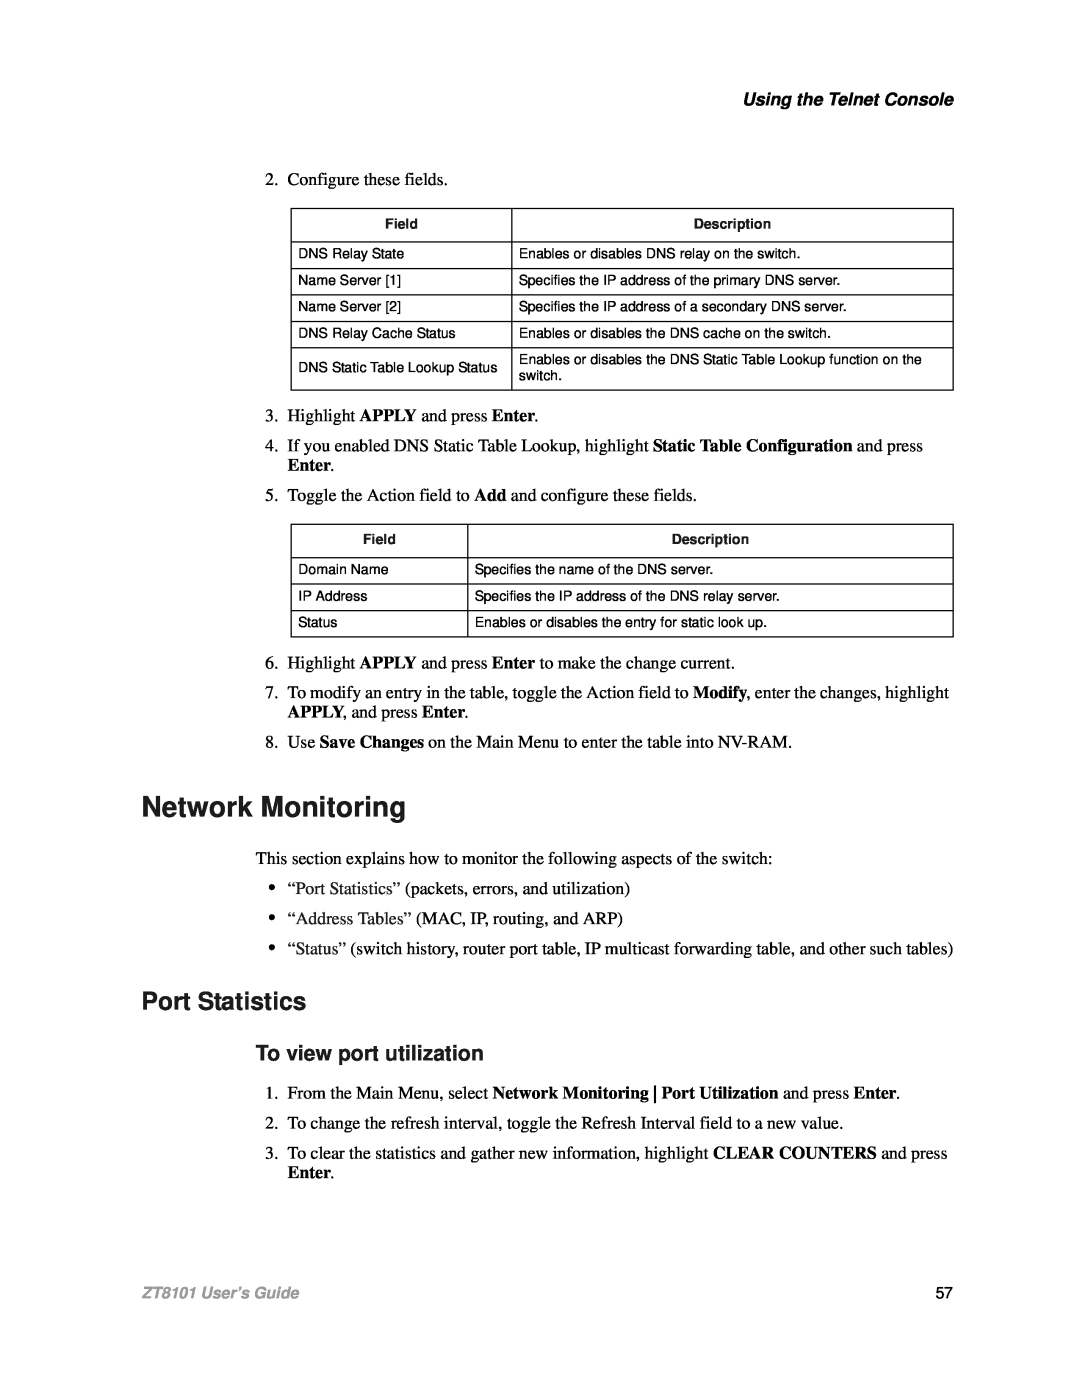 Intel ZT8101 user manual Network Monitoring, Port Statistics, To view port utilization, Using the Telnet Console 